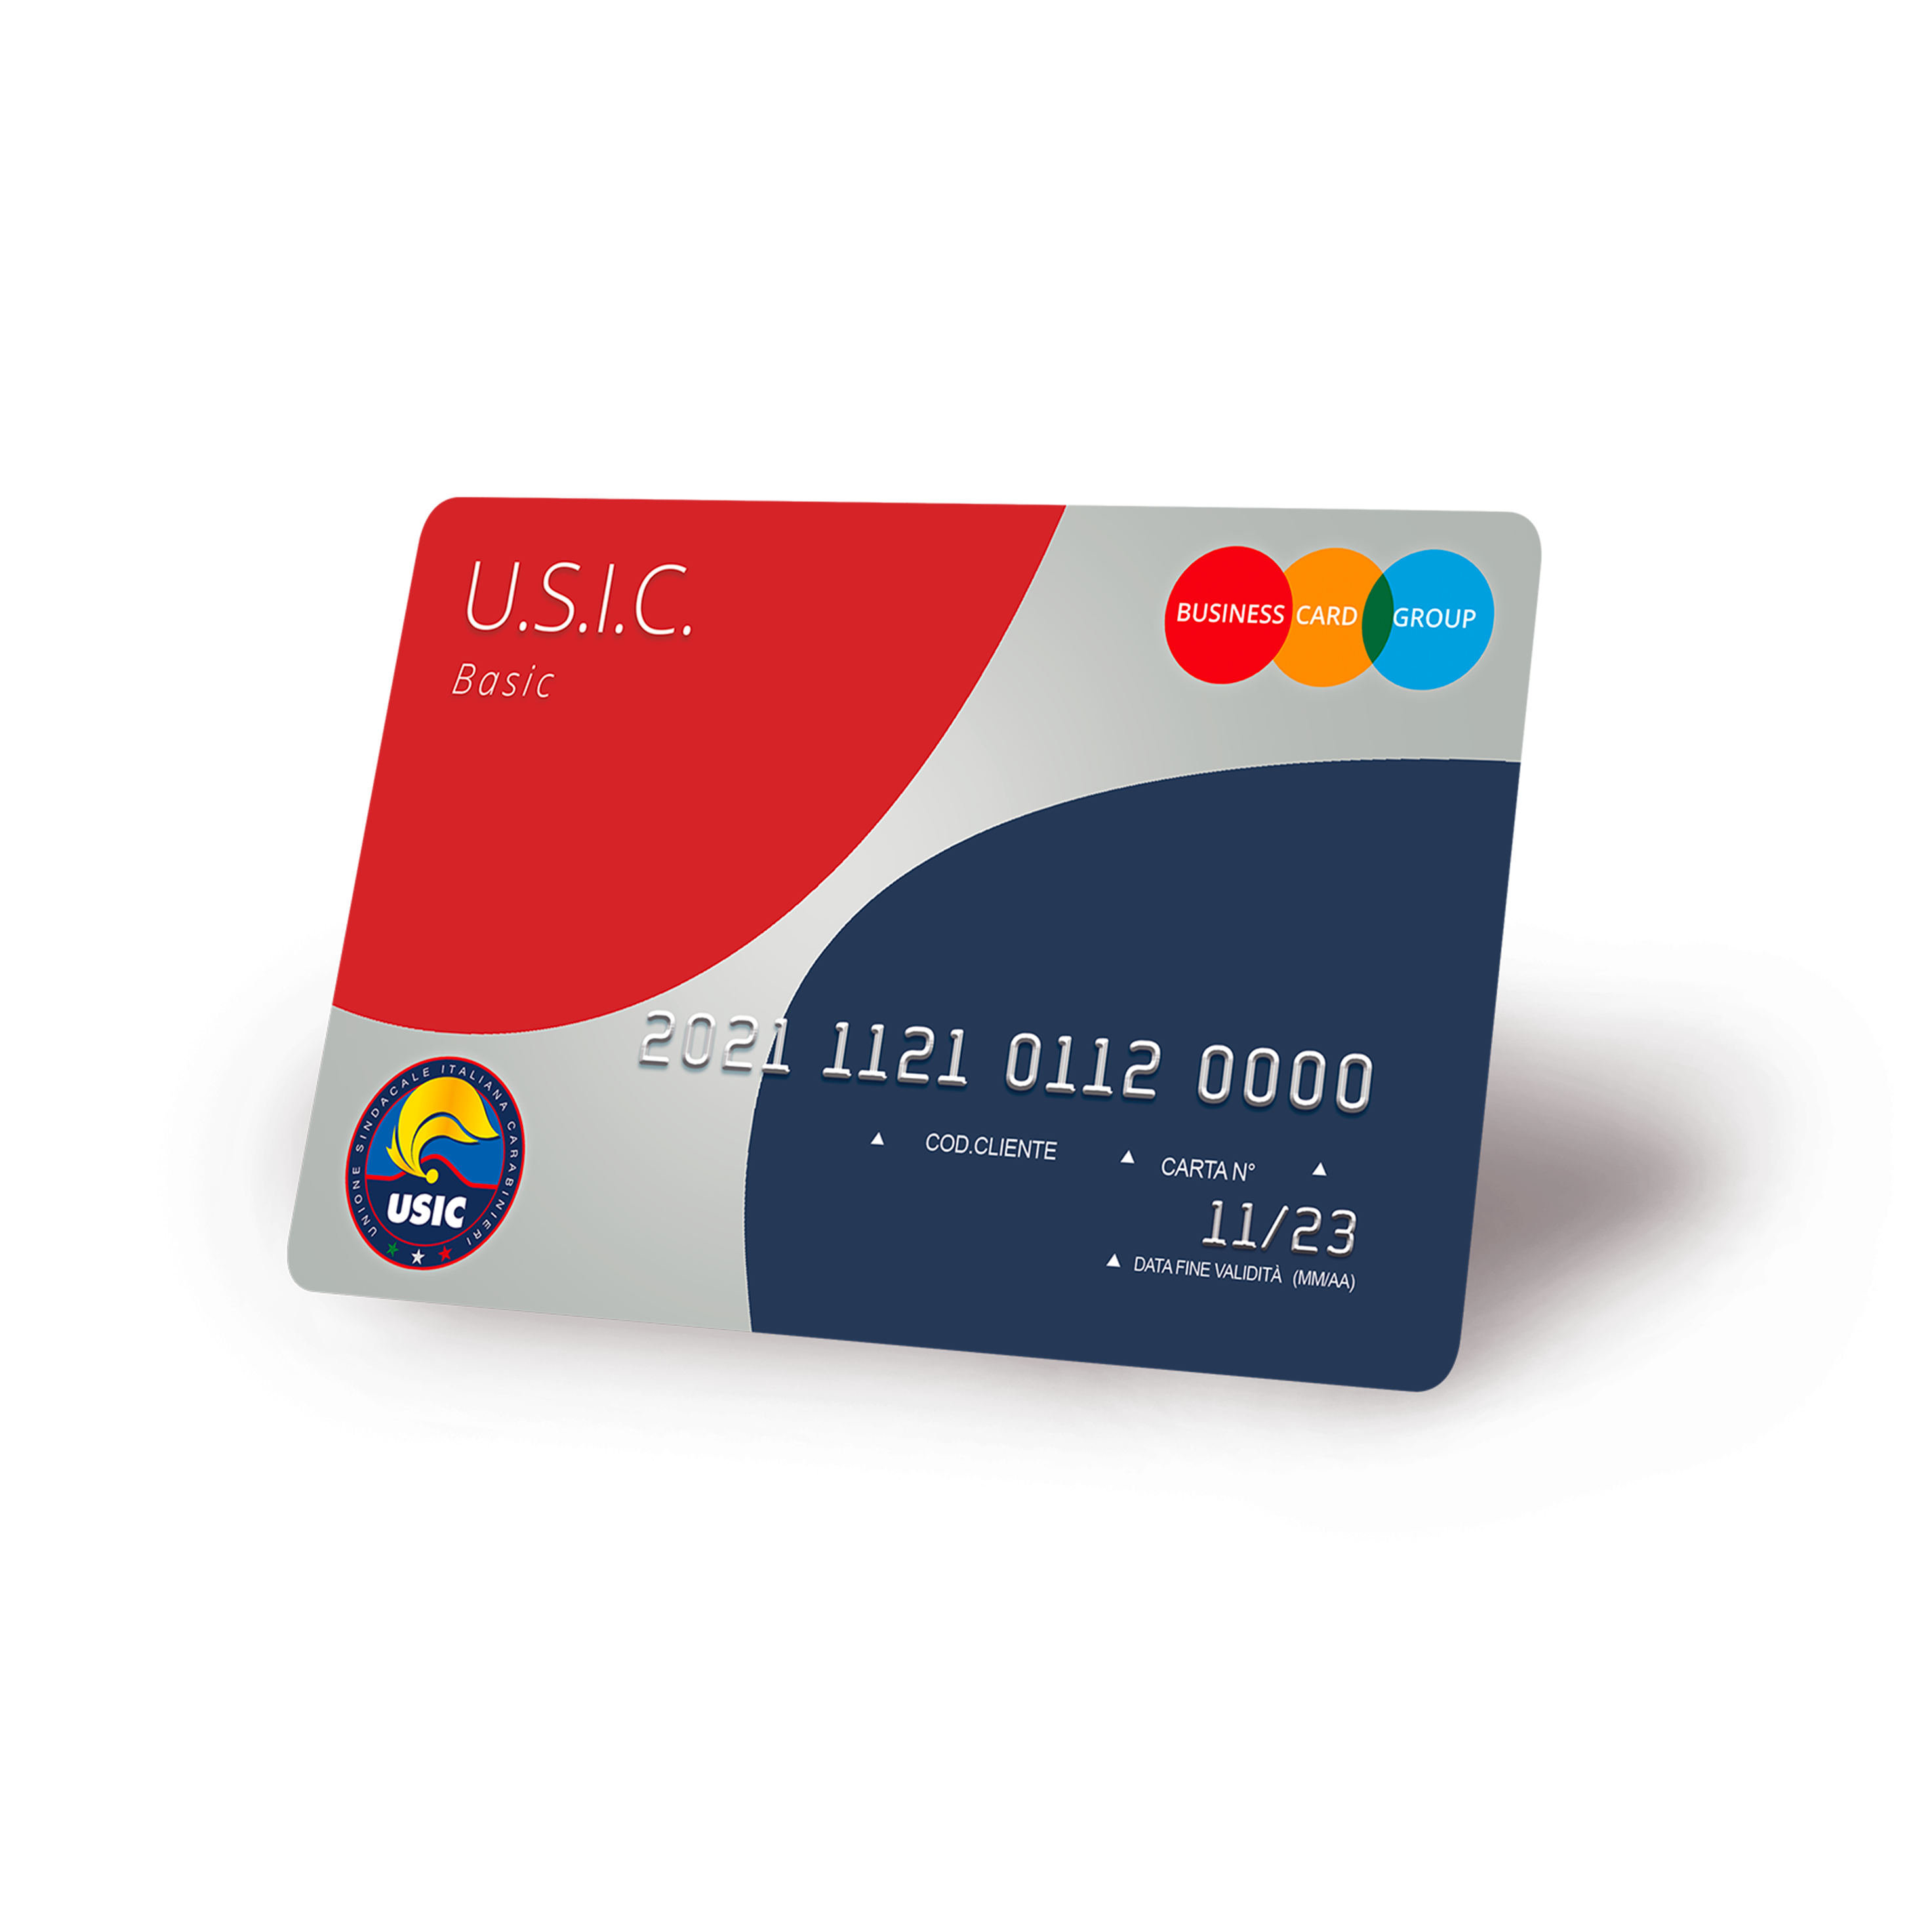 Business Card U.S.I.C. - Basic